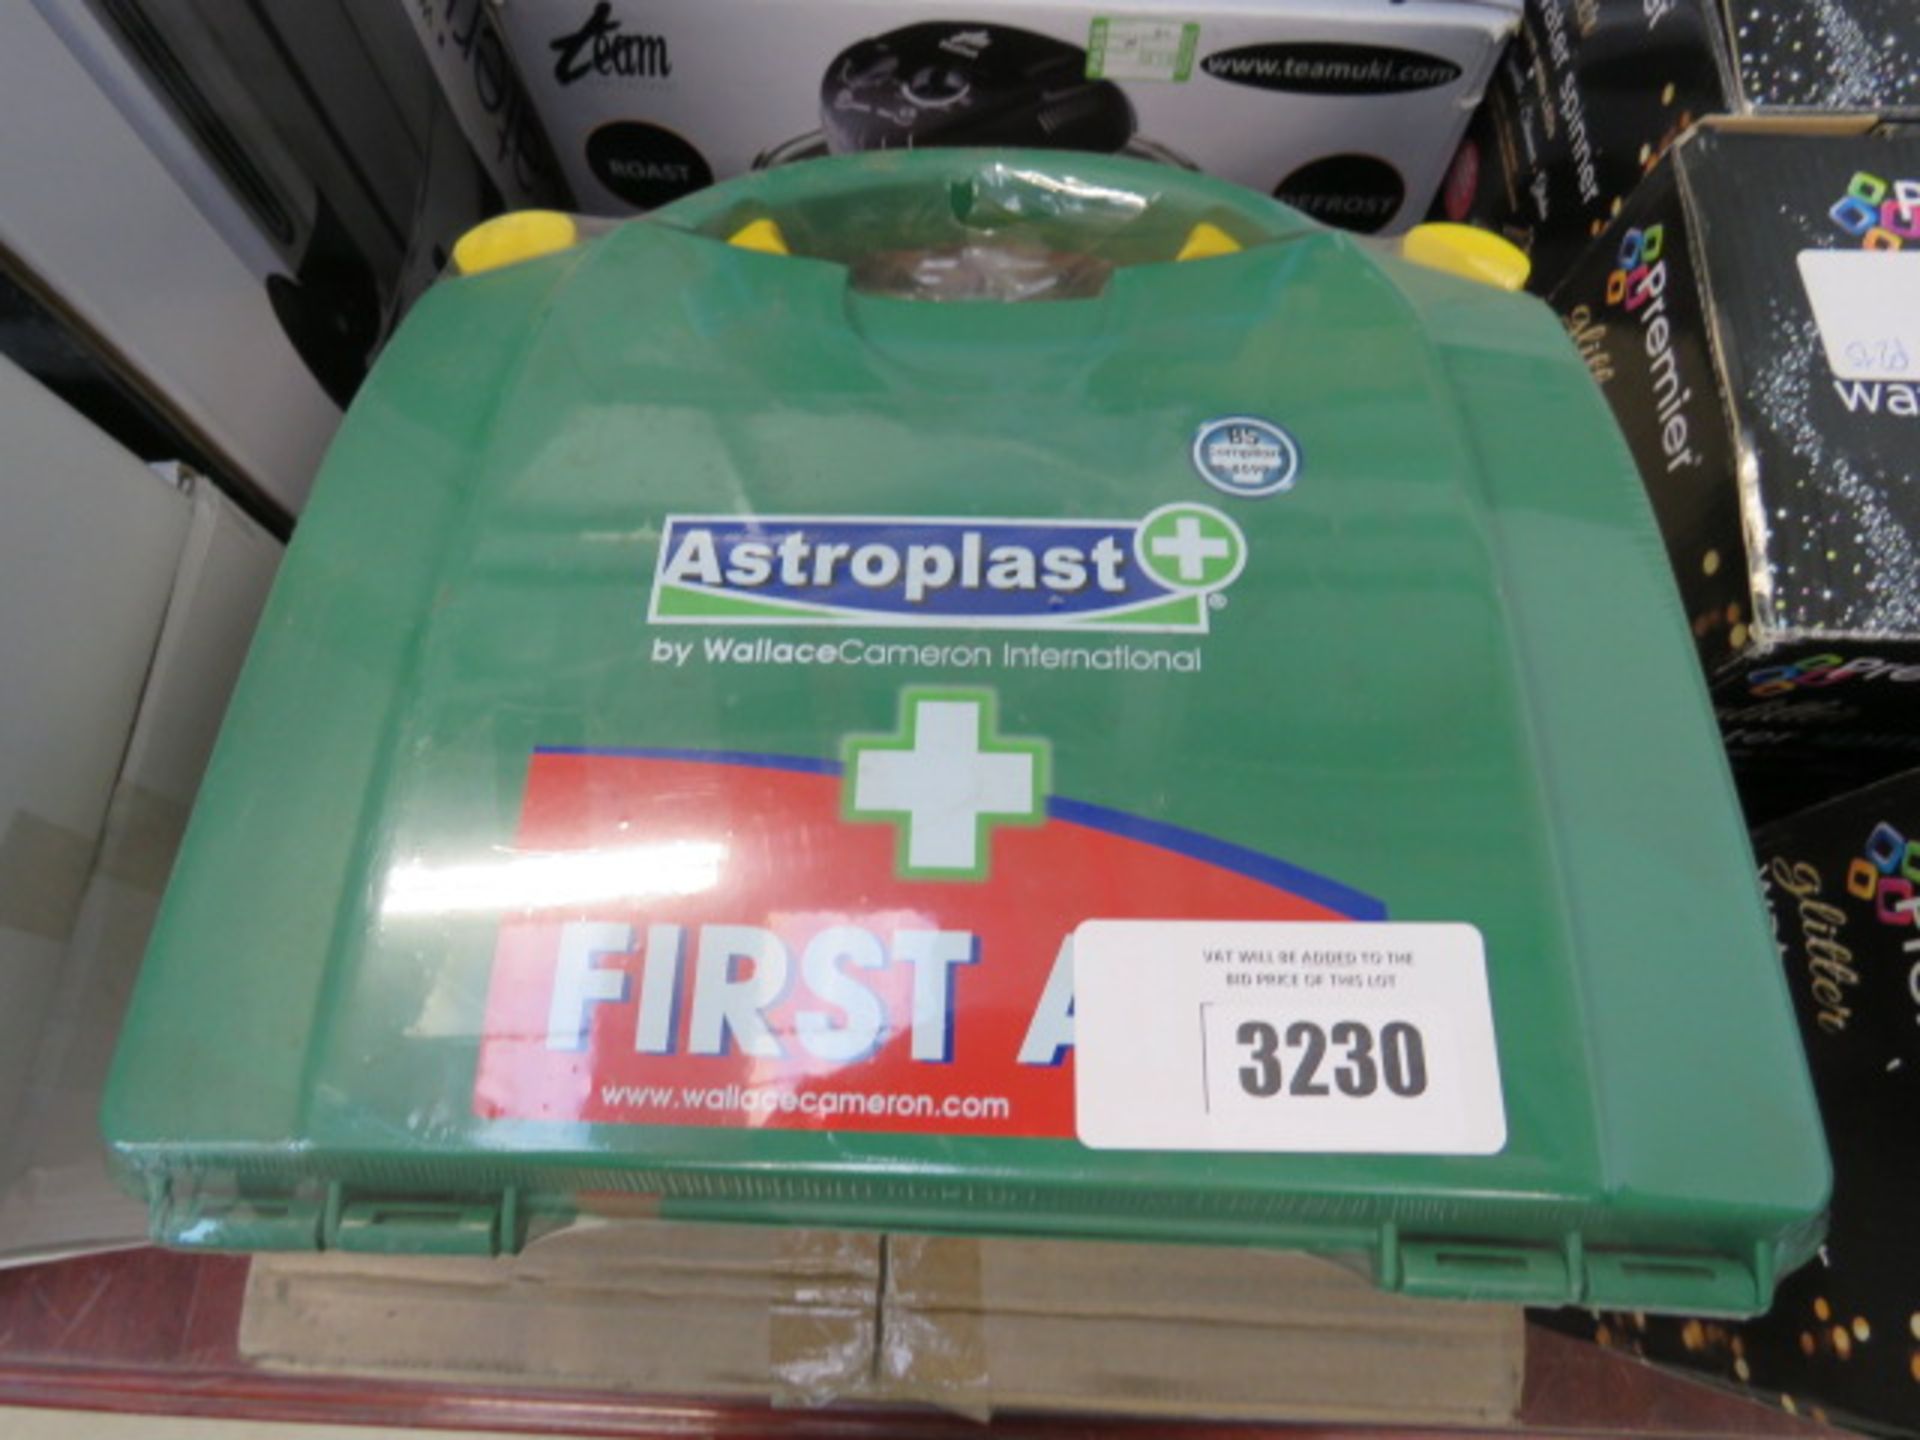 2 first aid kits